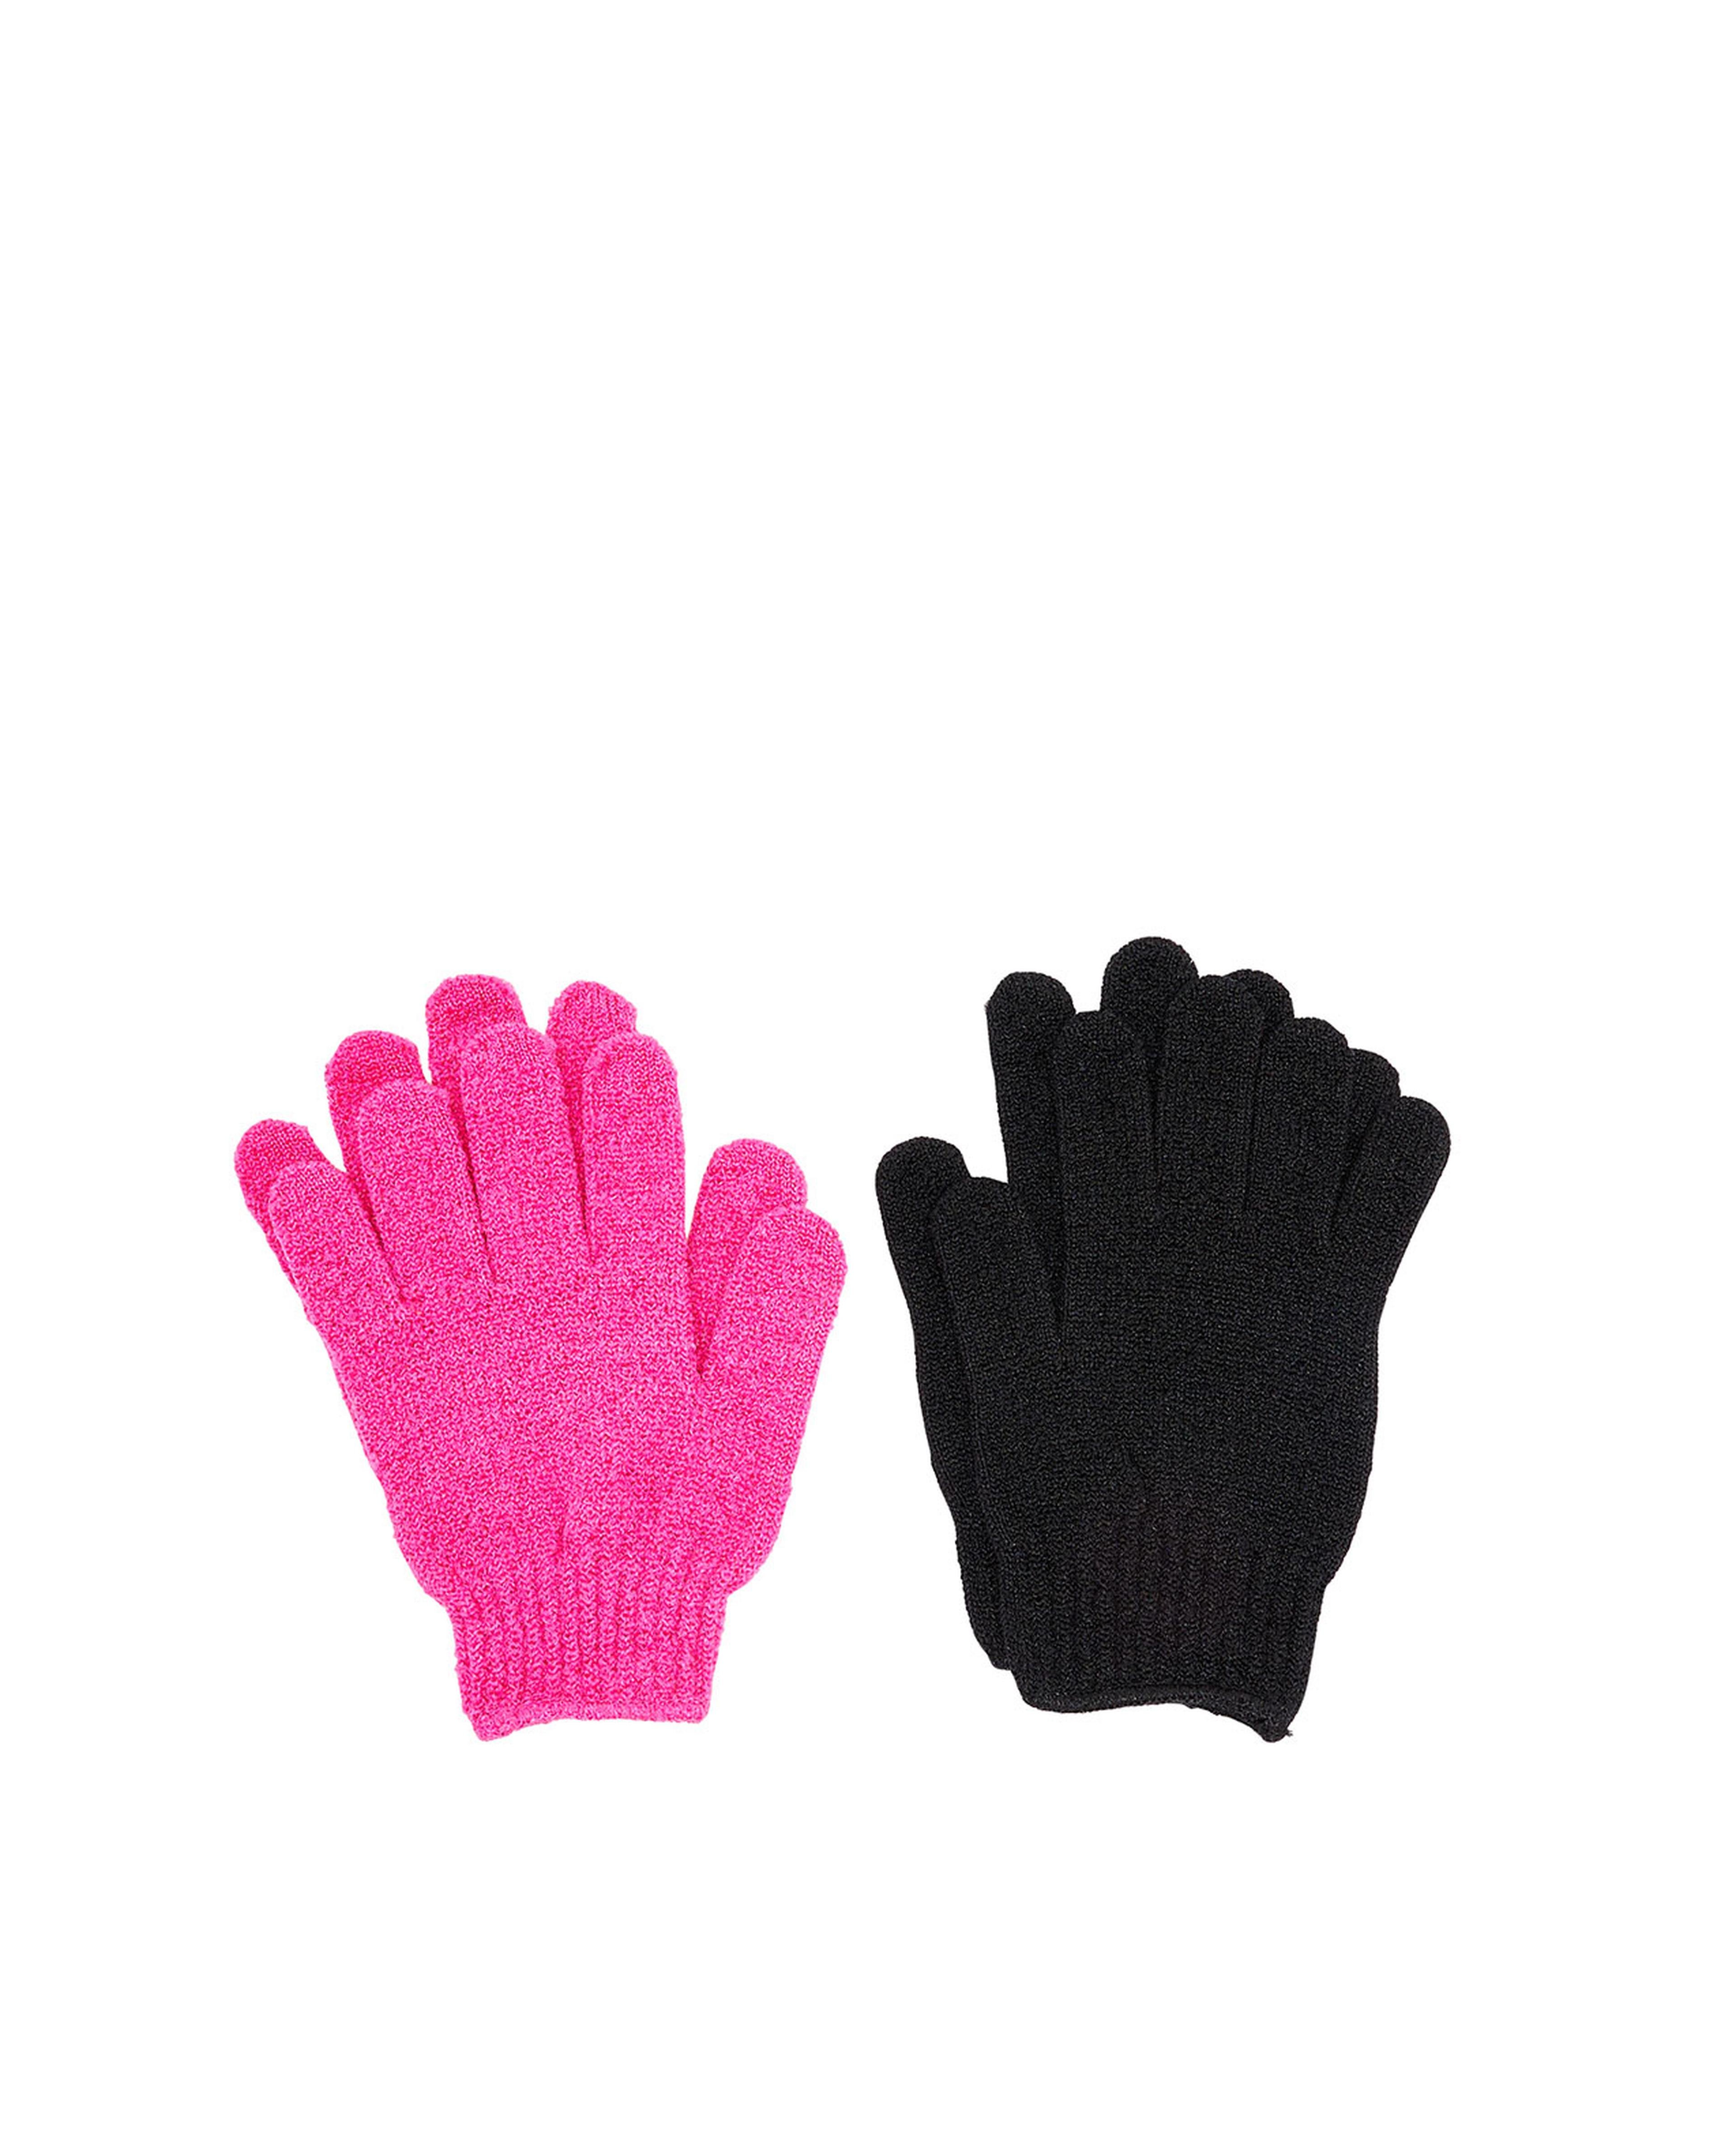 Pack of Bath Gloves